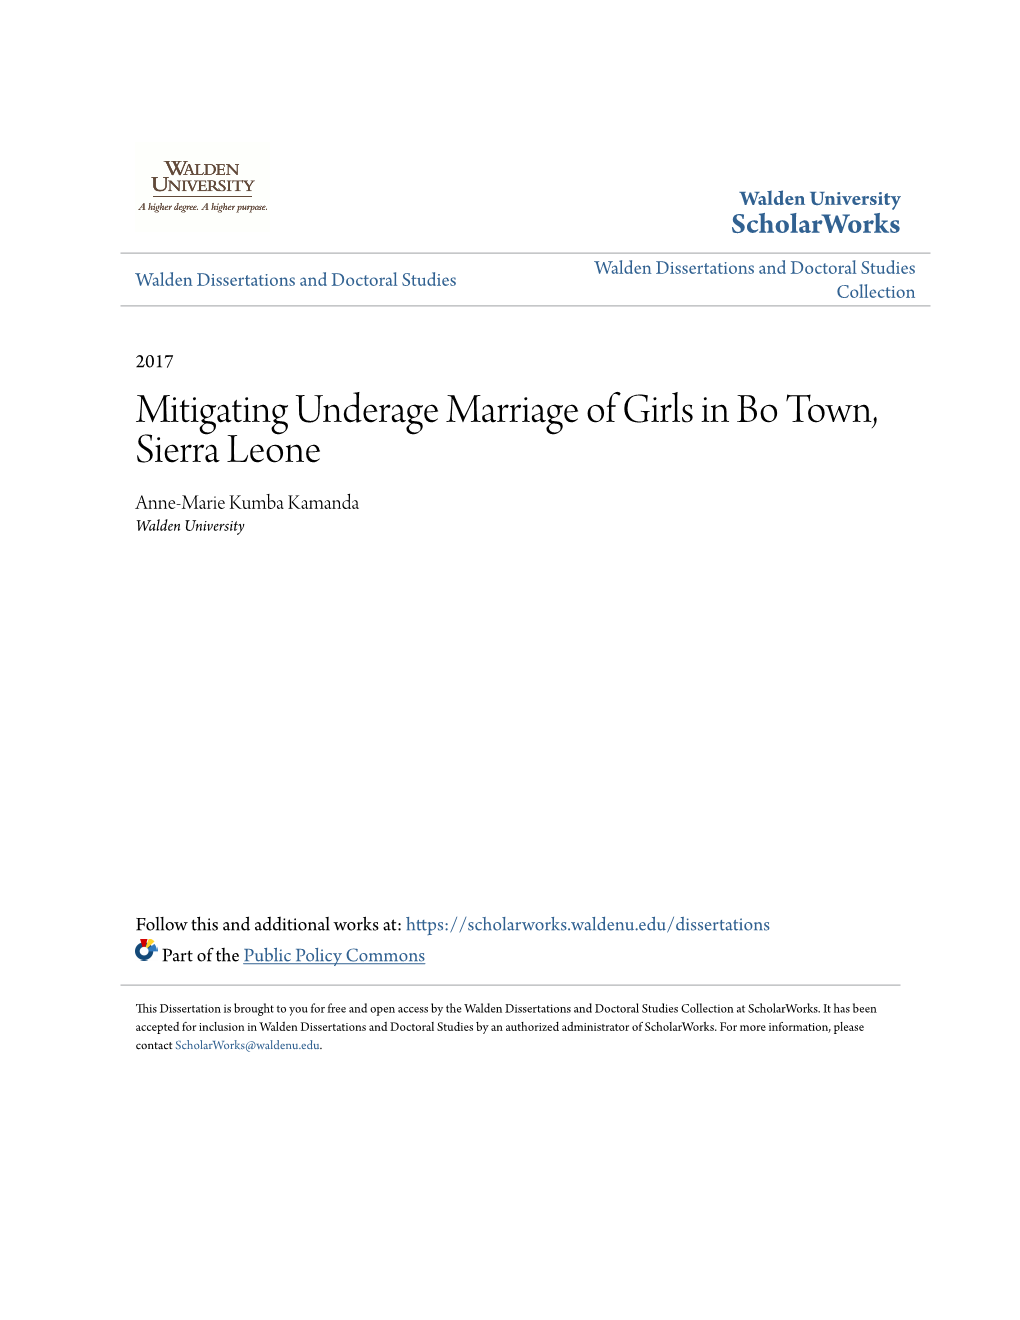 Mitigating Underage Marriage of Girls in Bo Town, Sierra Leone Anne-Marie Kumba Kamanda Walden University